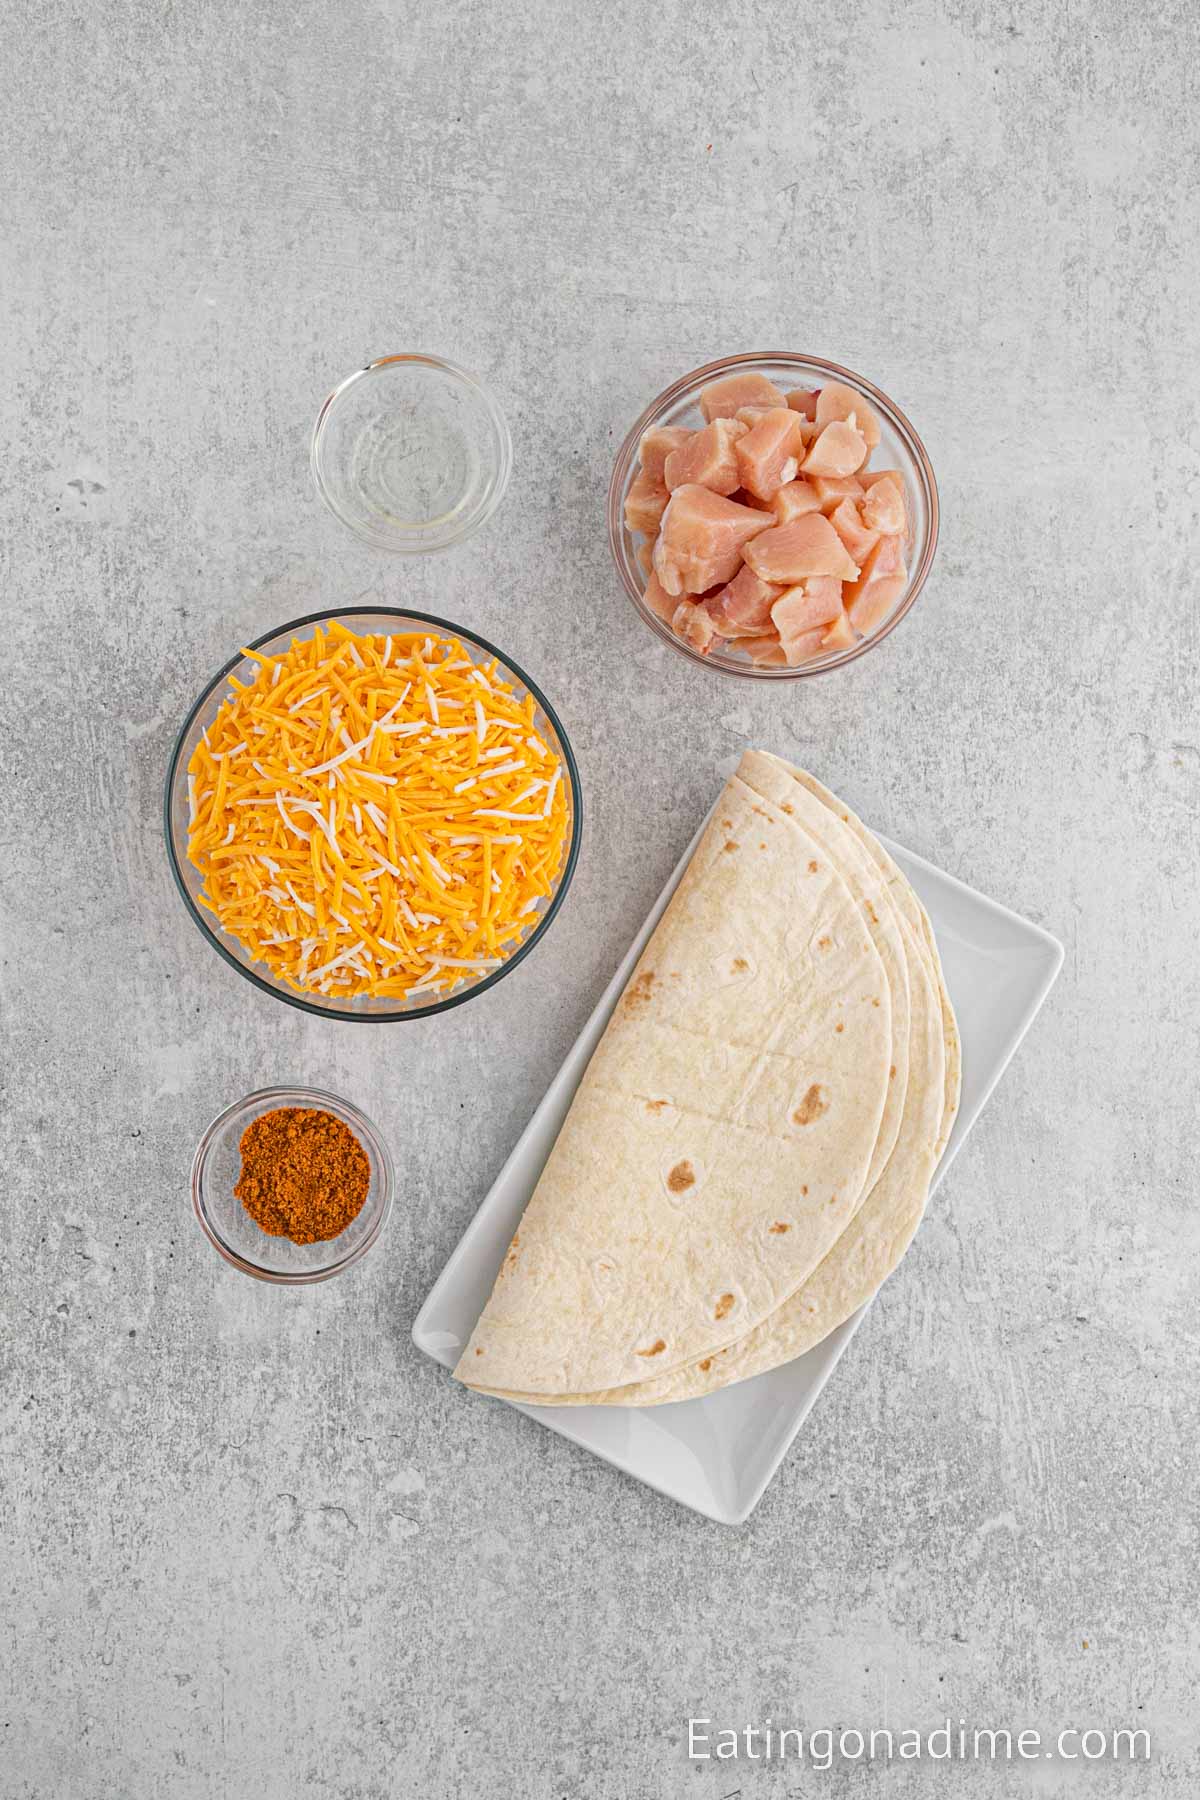 Ingredients needed - chicken, oil, taco seasoning, cheese, tortilla